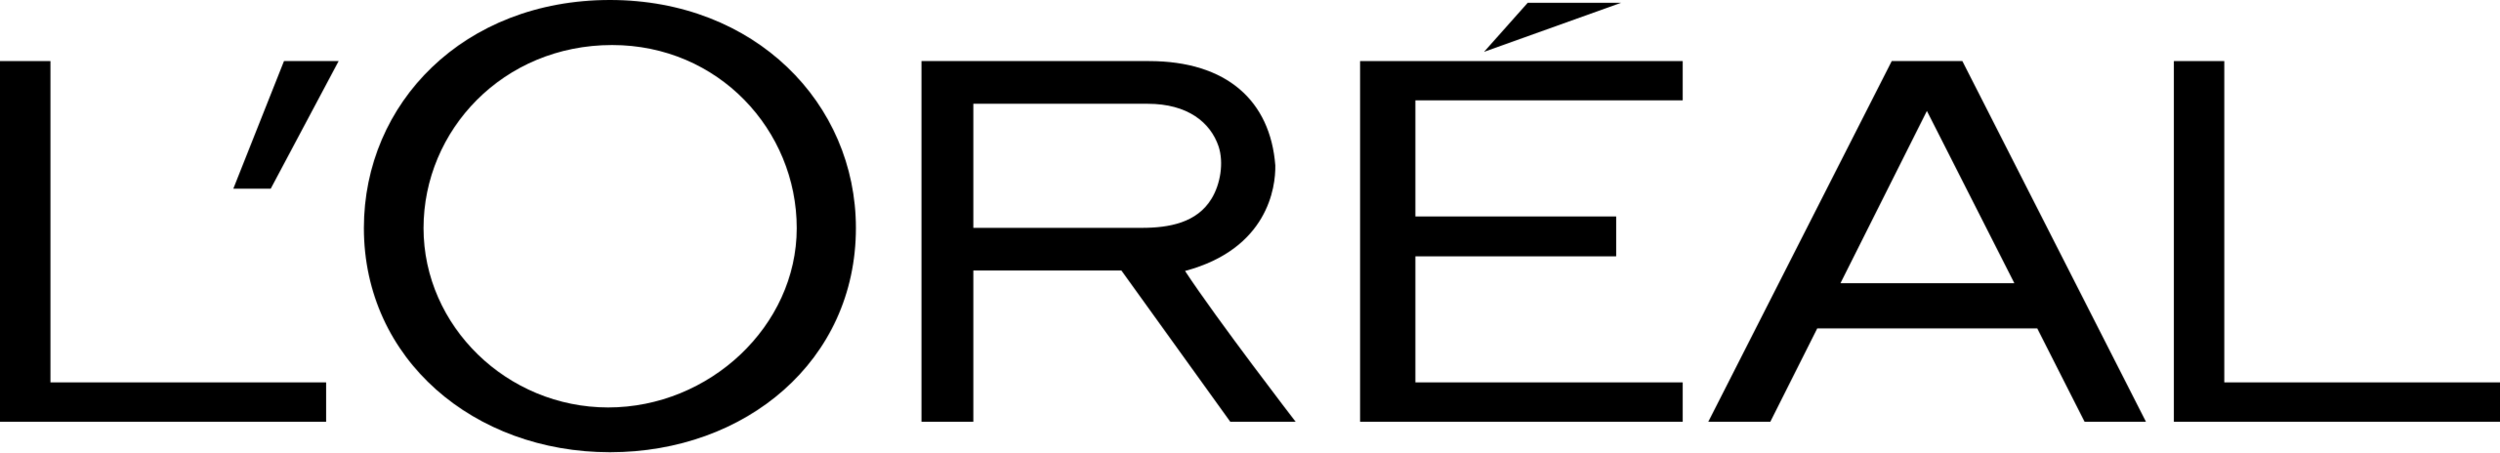 L'Oréal_logo.svg-2.png